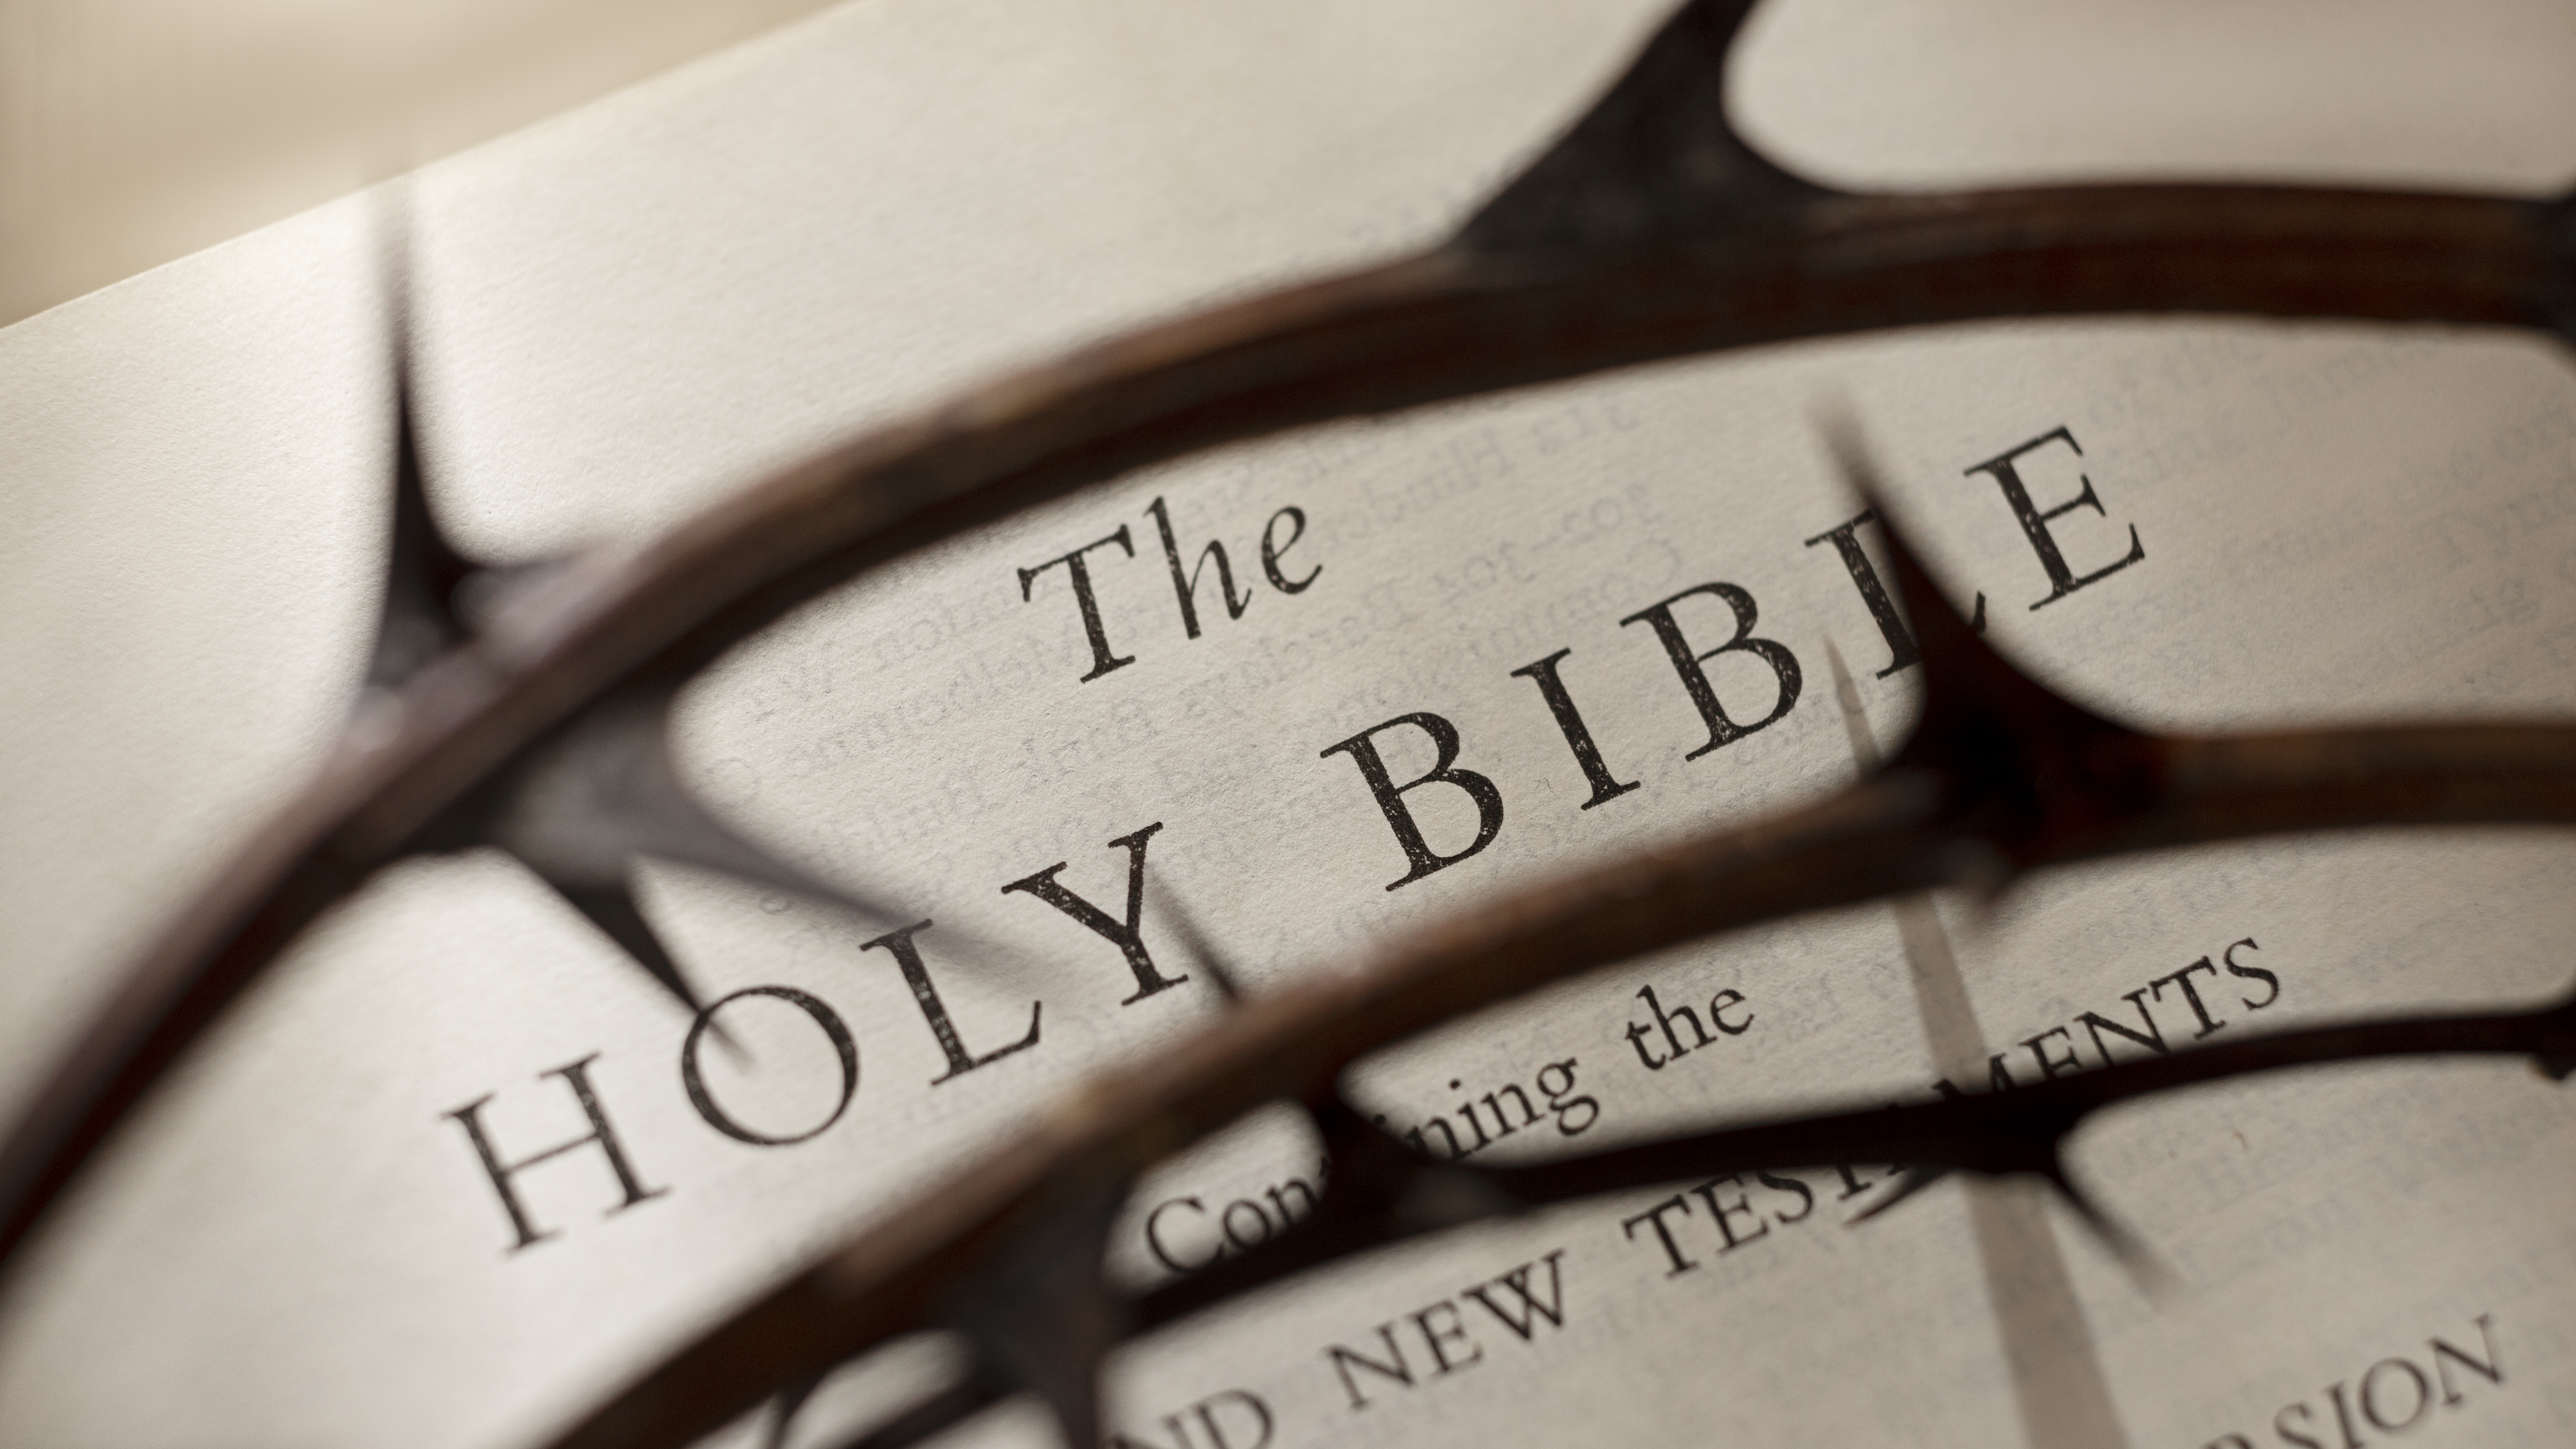 Old Testament vs. New Testament: Decoding the Bible